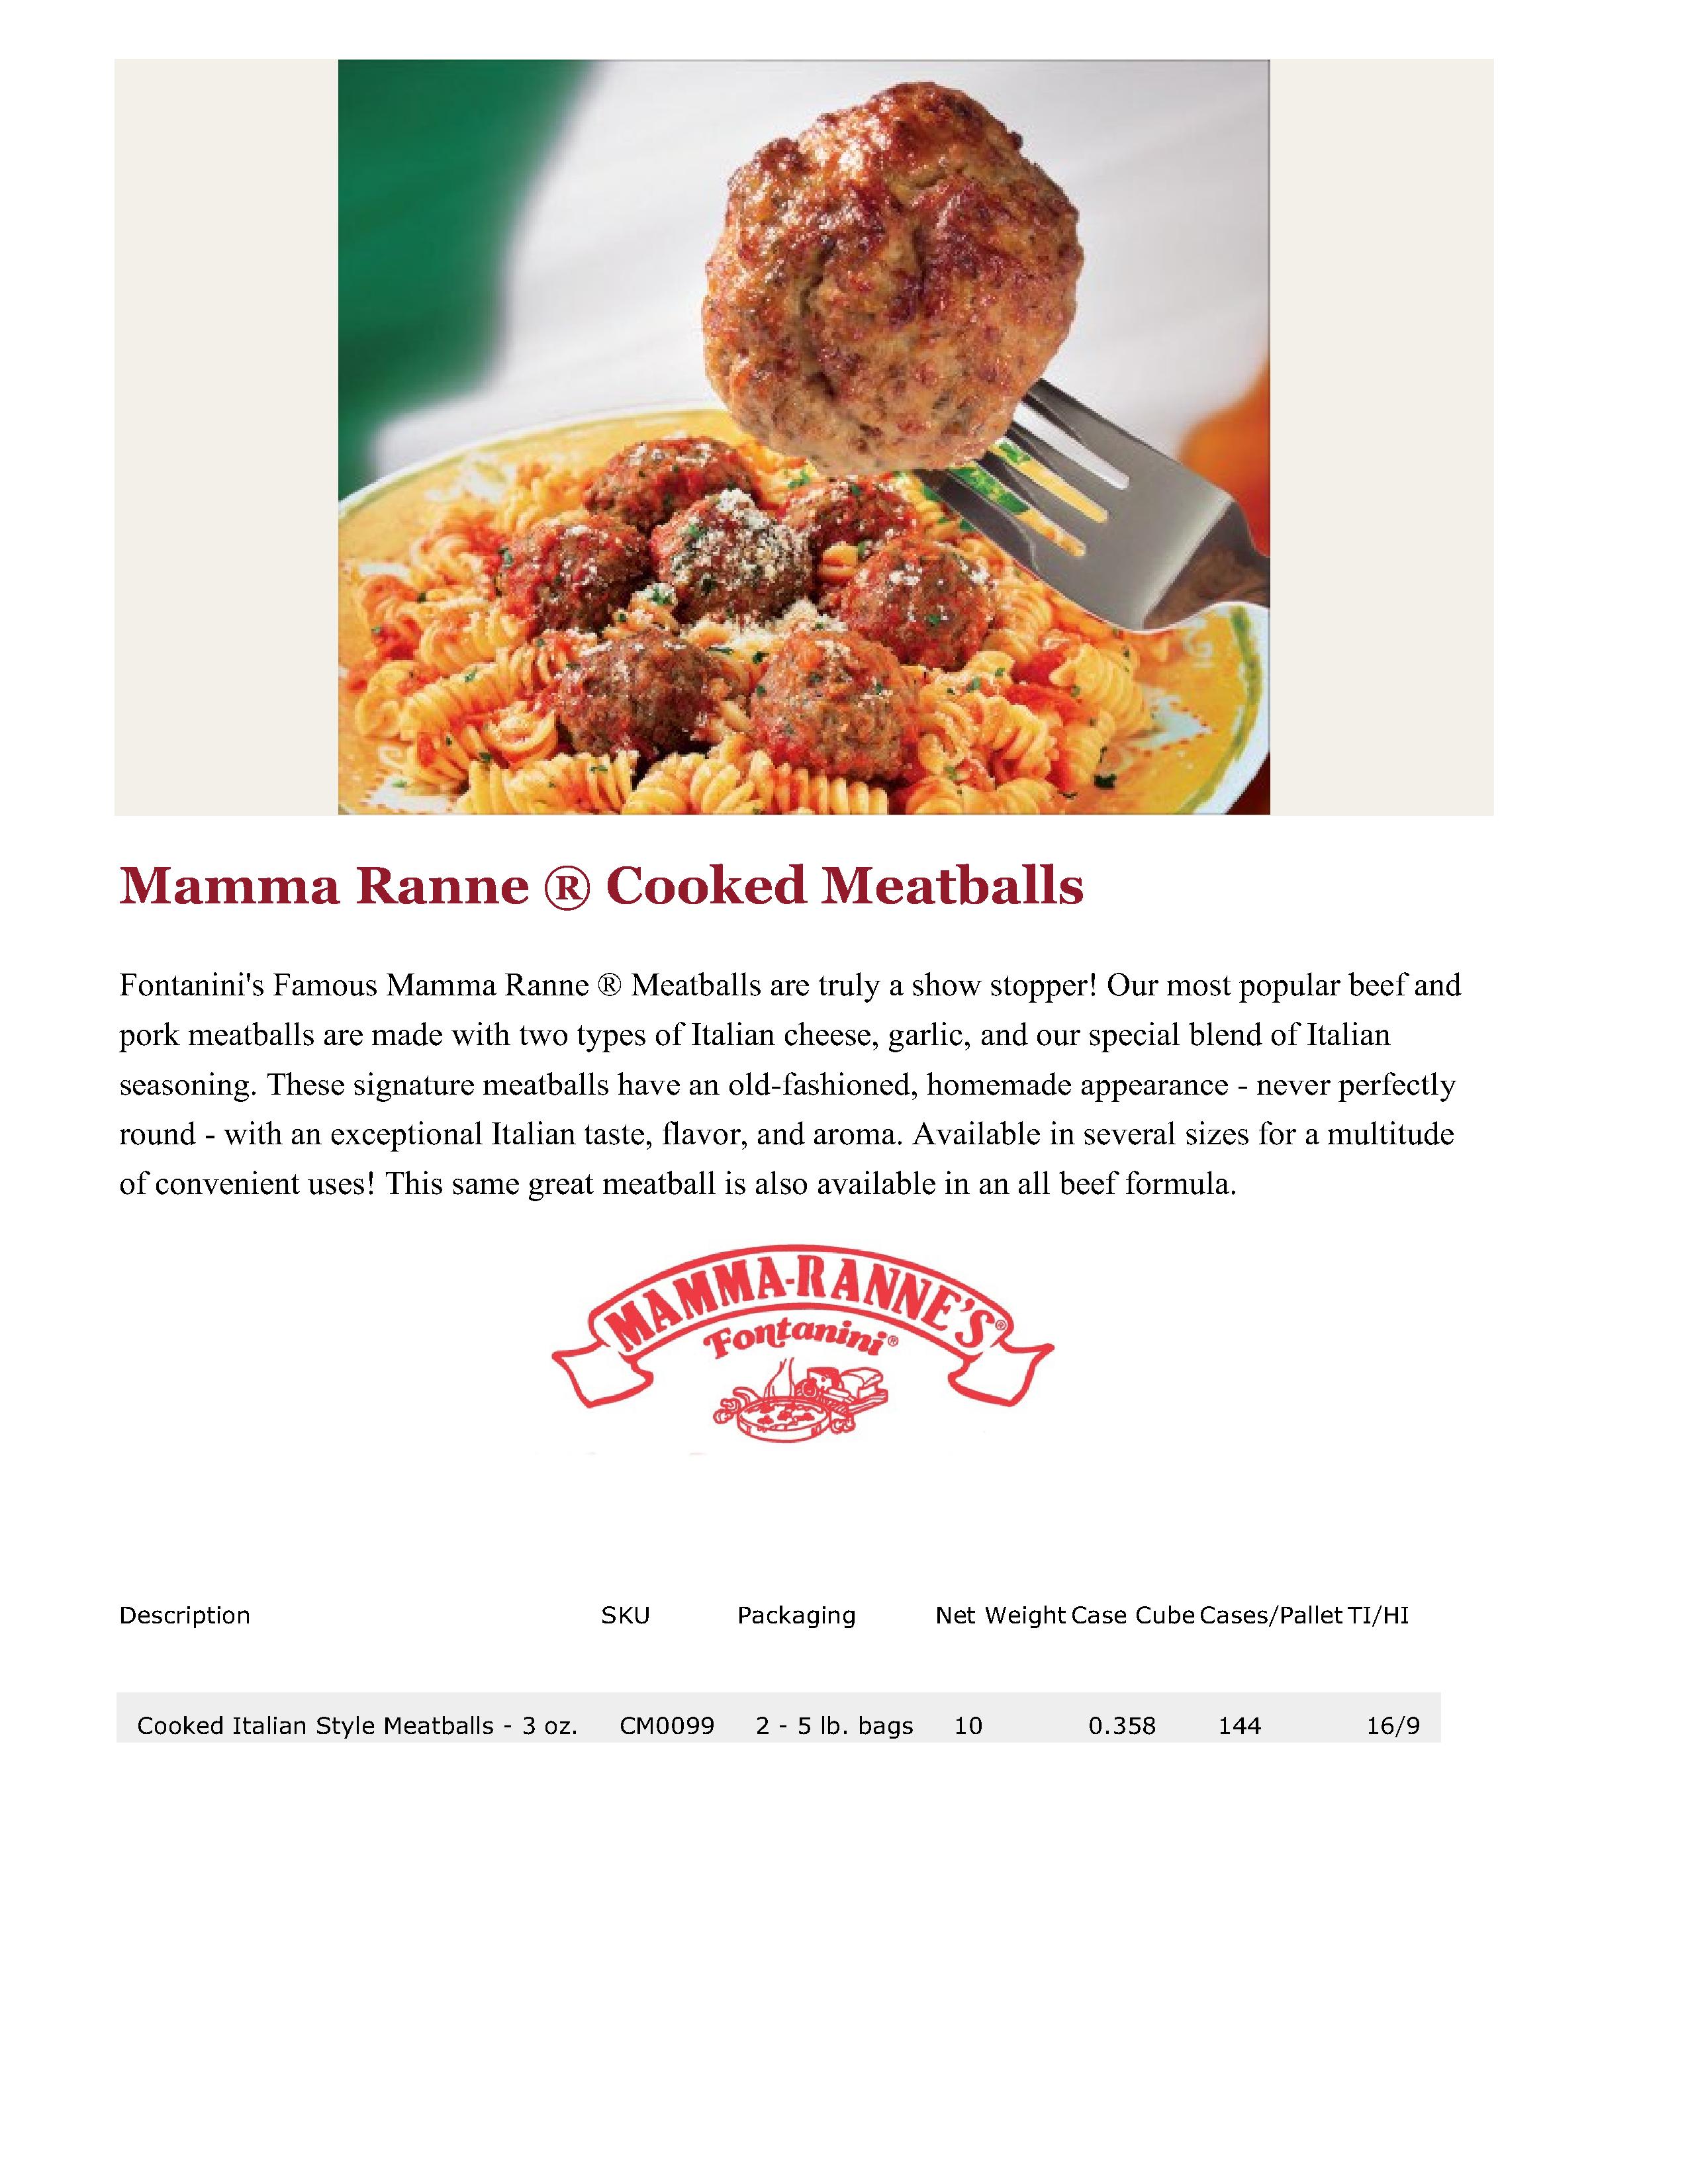 Mamma Ranne Cooked Italian Style 3oz Meatballs